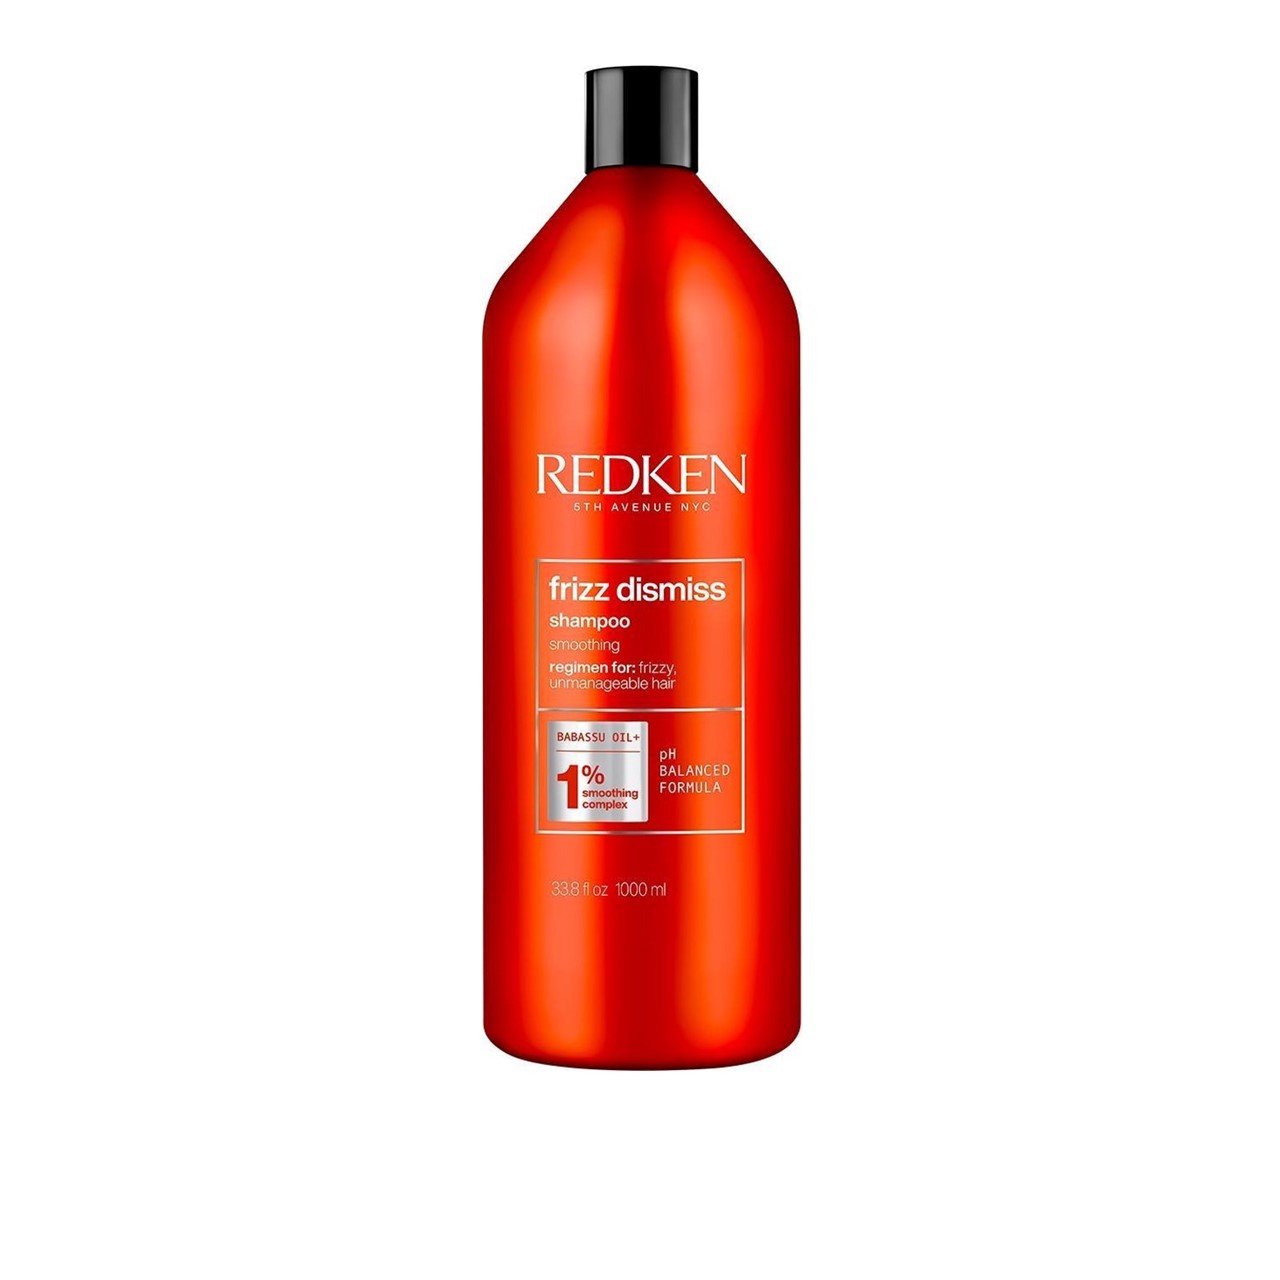 Redken Frizz Dismiss Shampoo 1L (33.81fl oz)